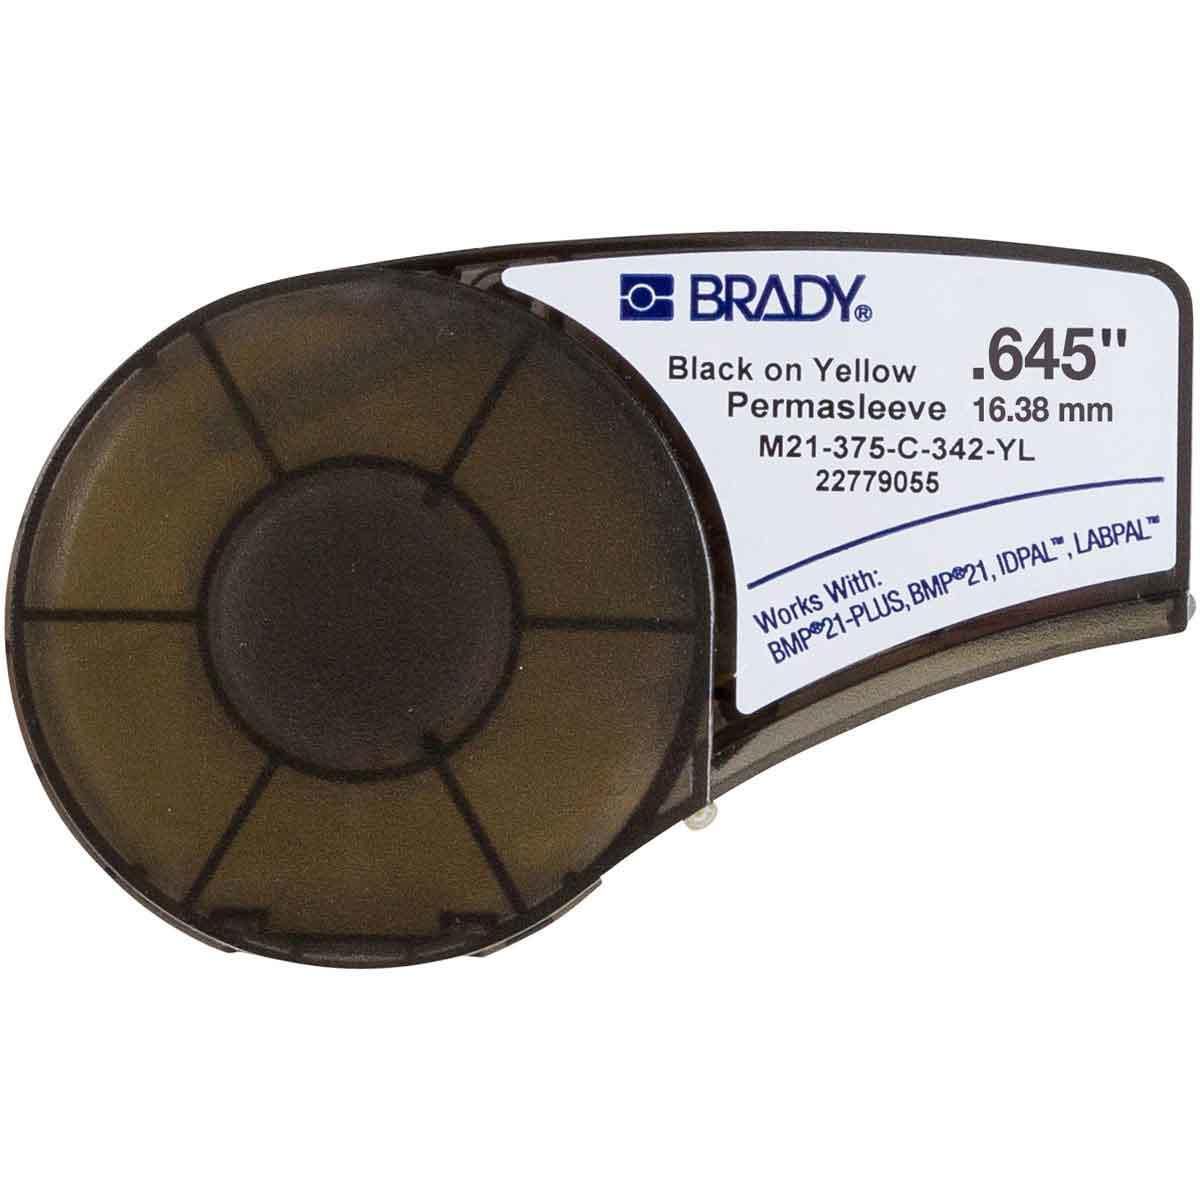 Brady M21-375-C-342-YL PermaSleeve Heat-shrink 